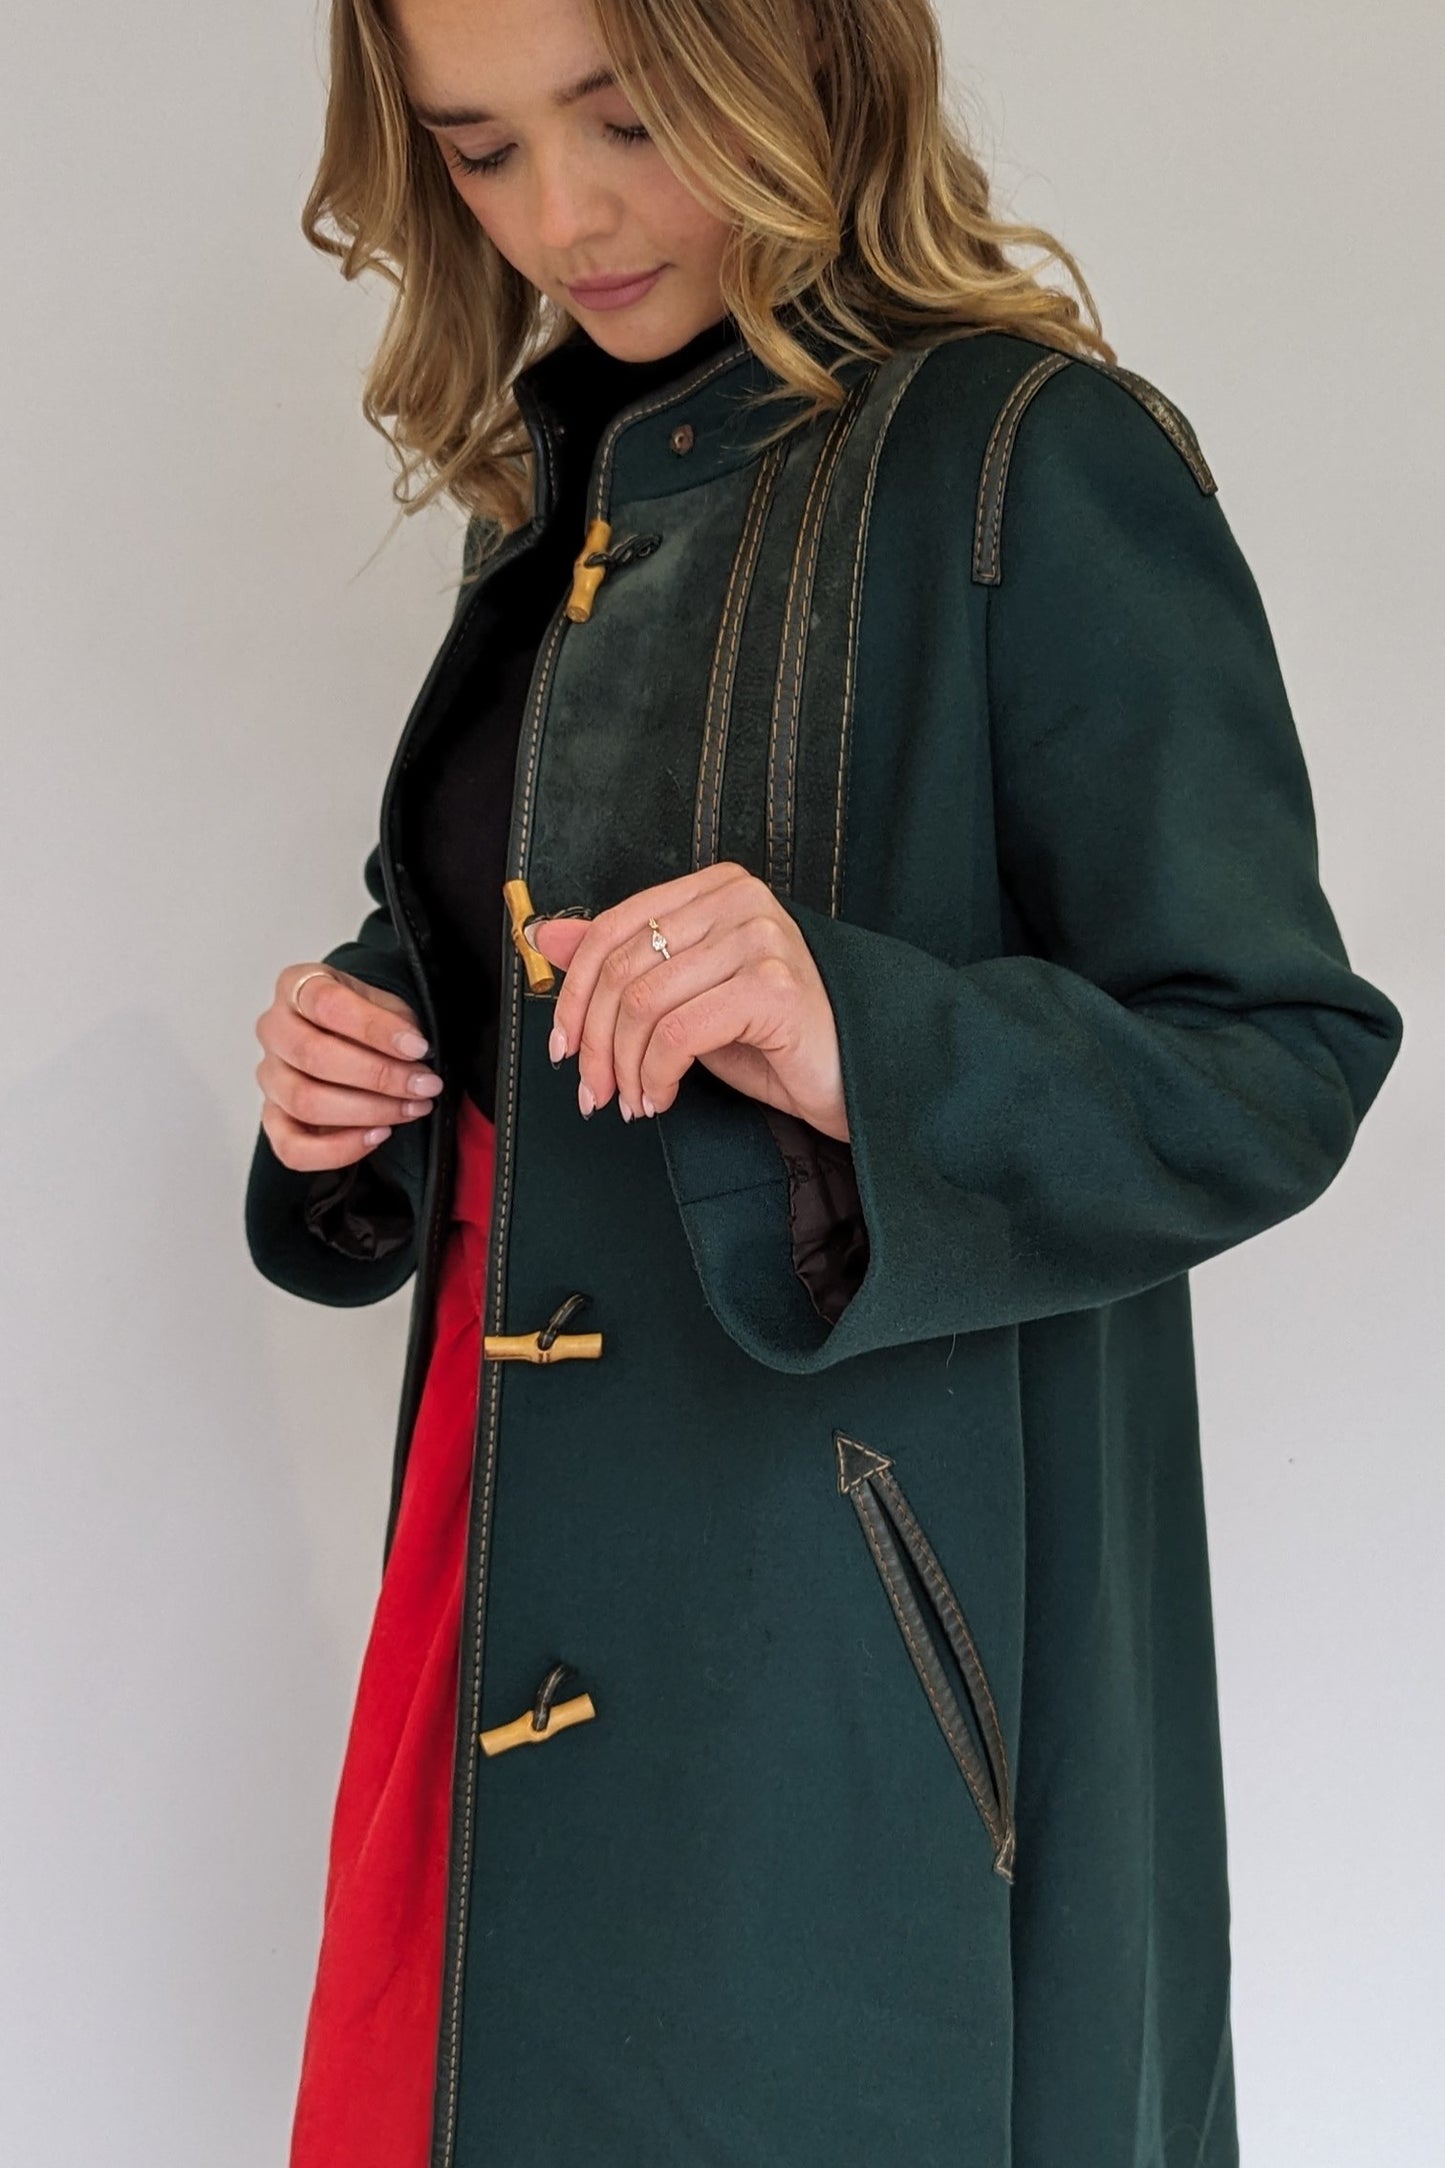 Flared sleeve on green wool coat